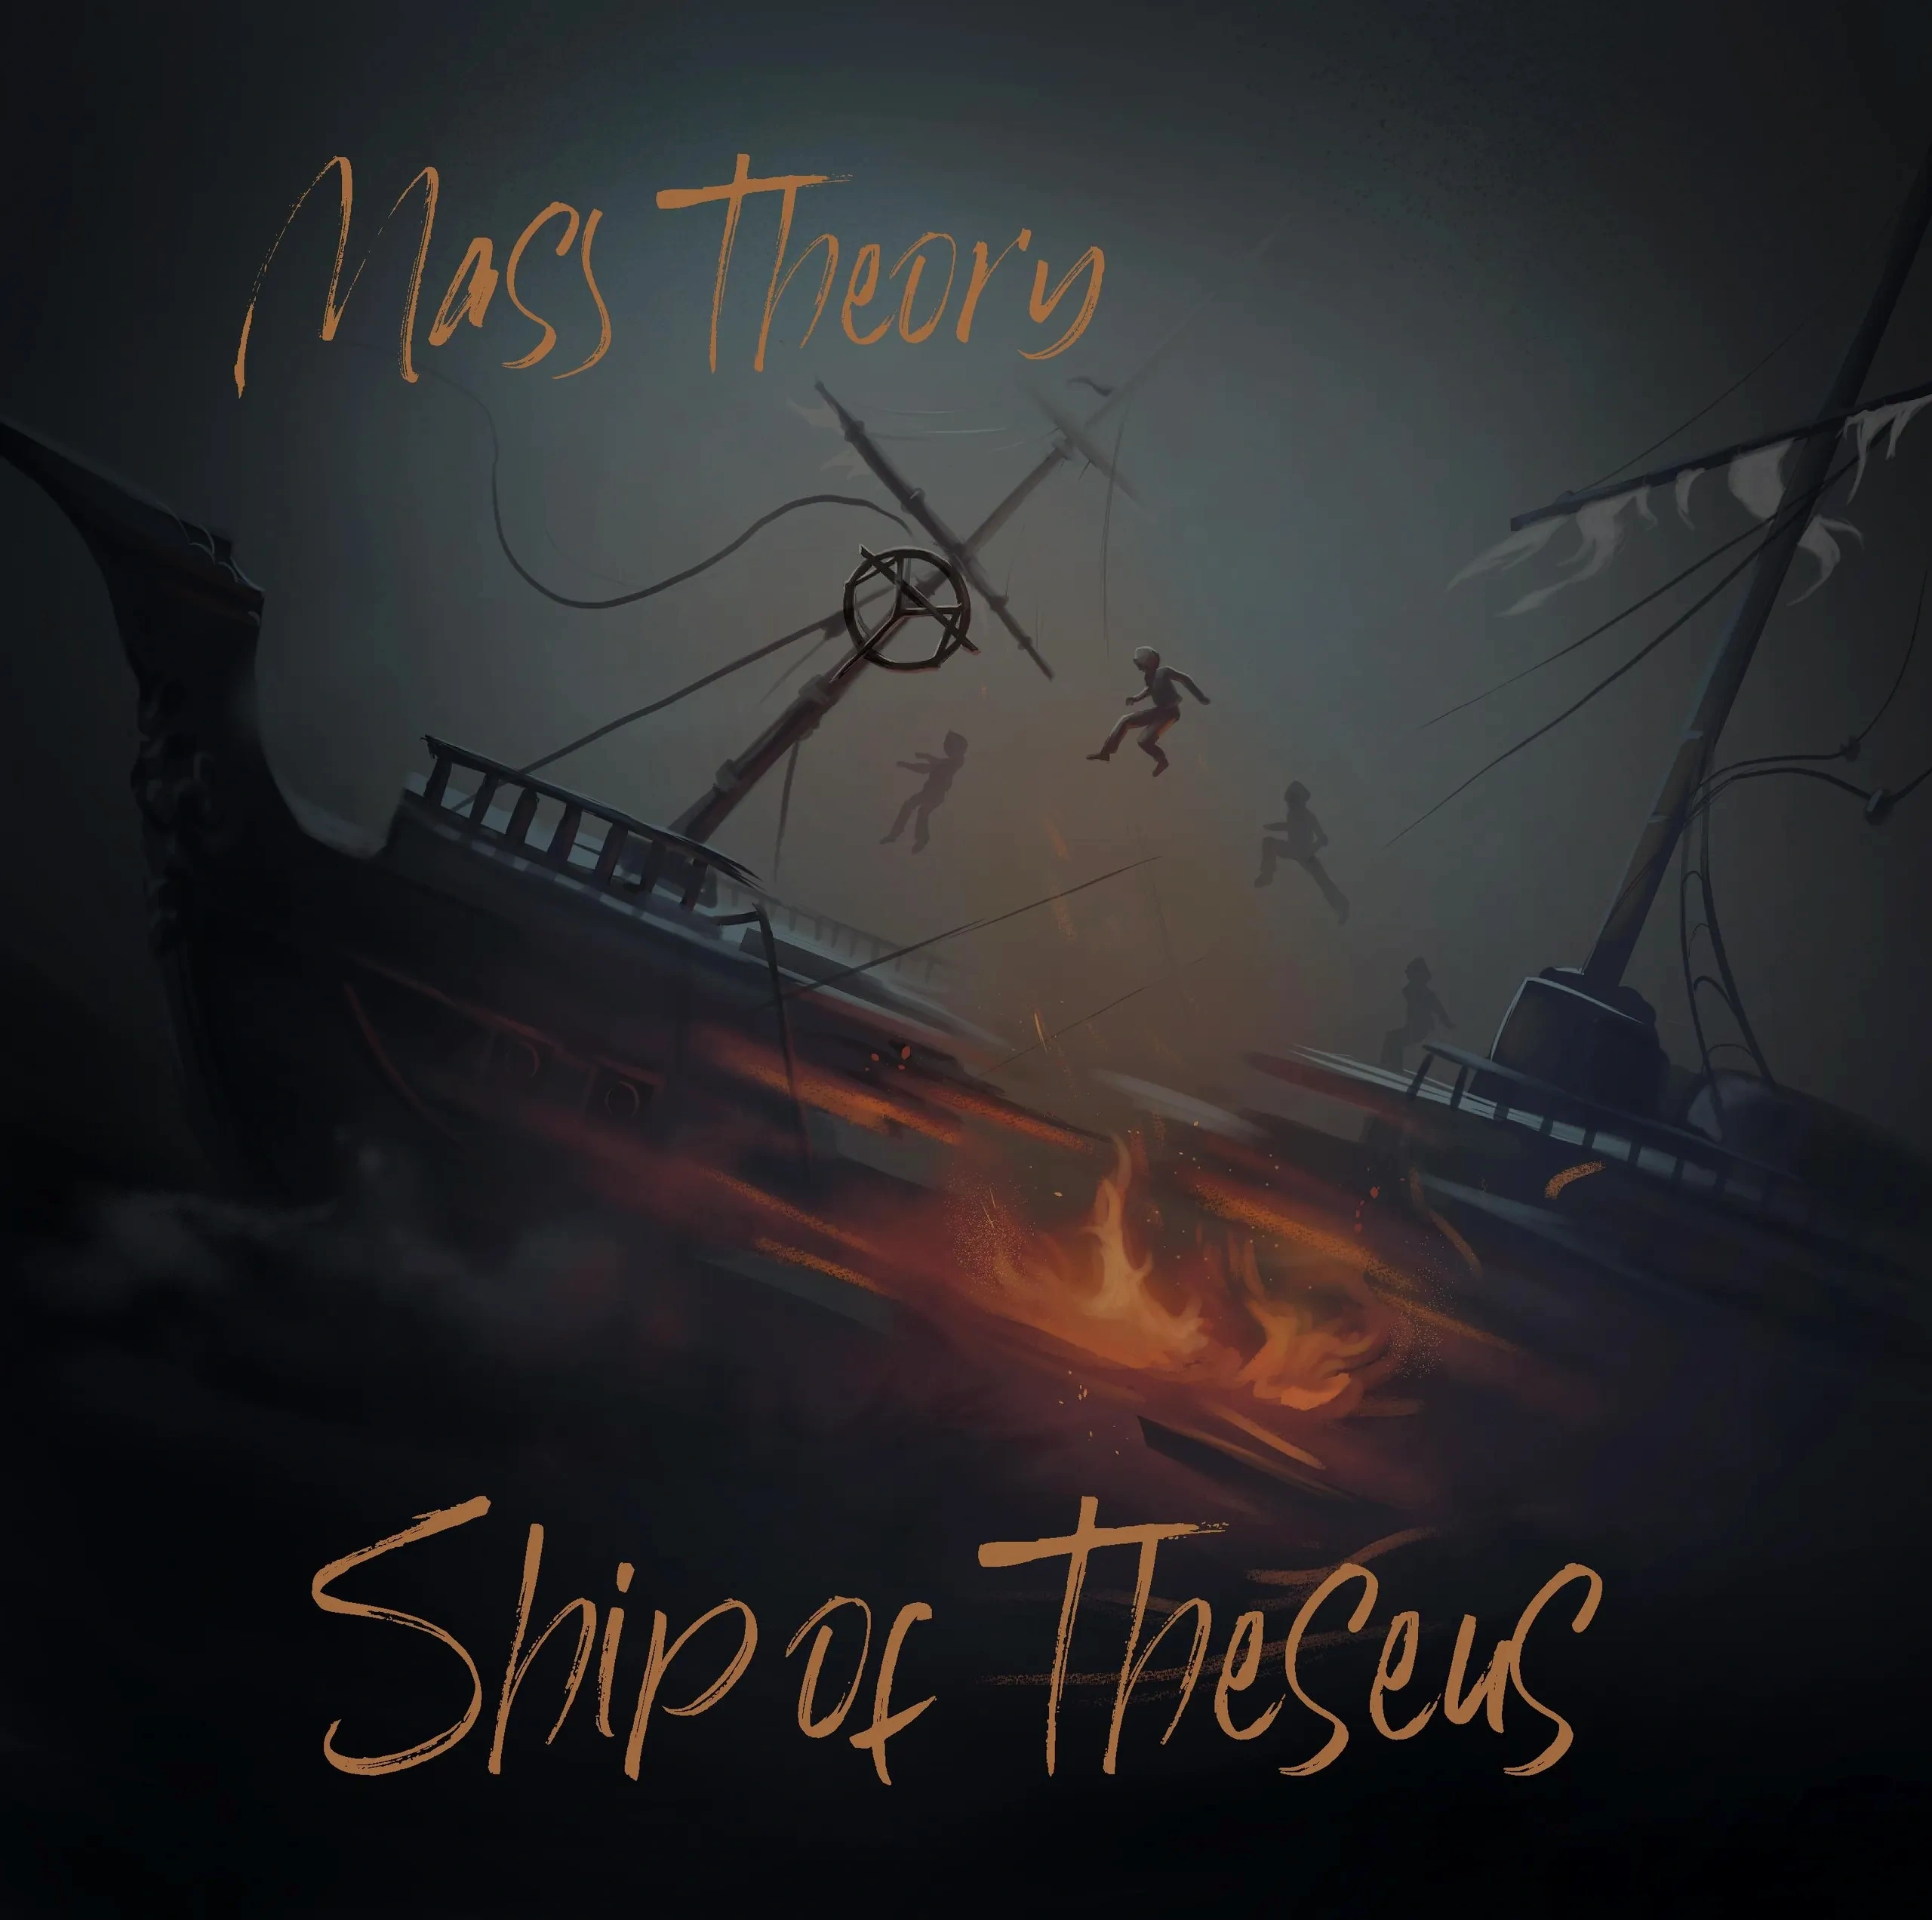 Ship of Theseus Cover Art